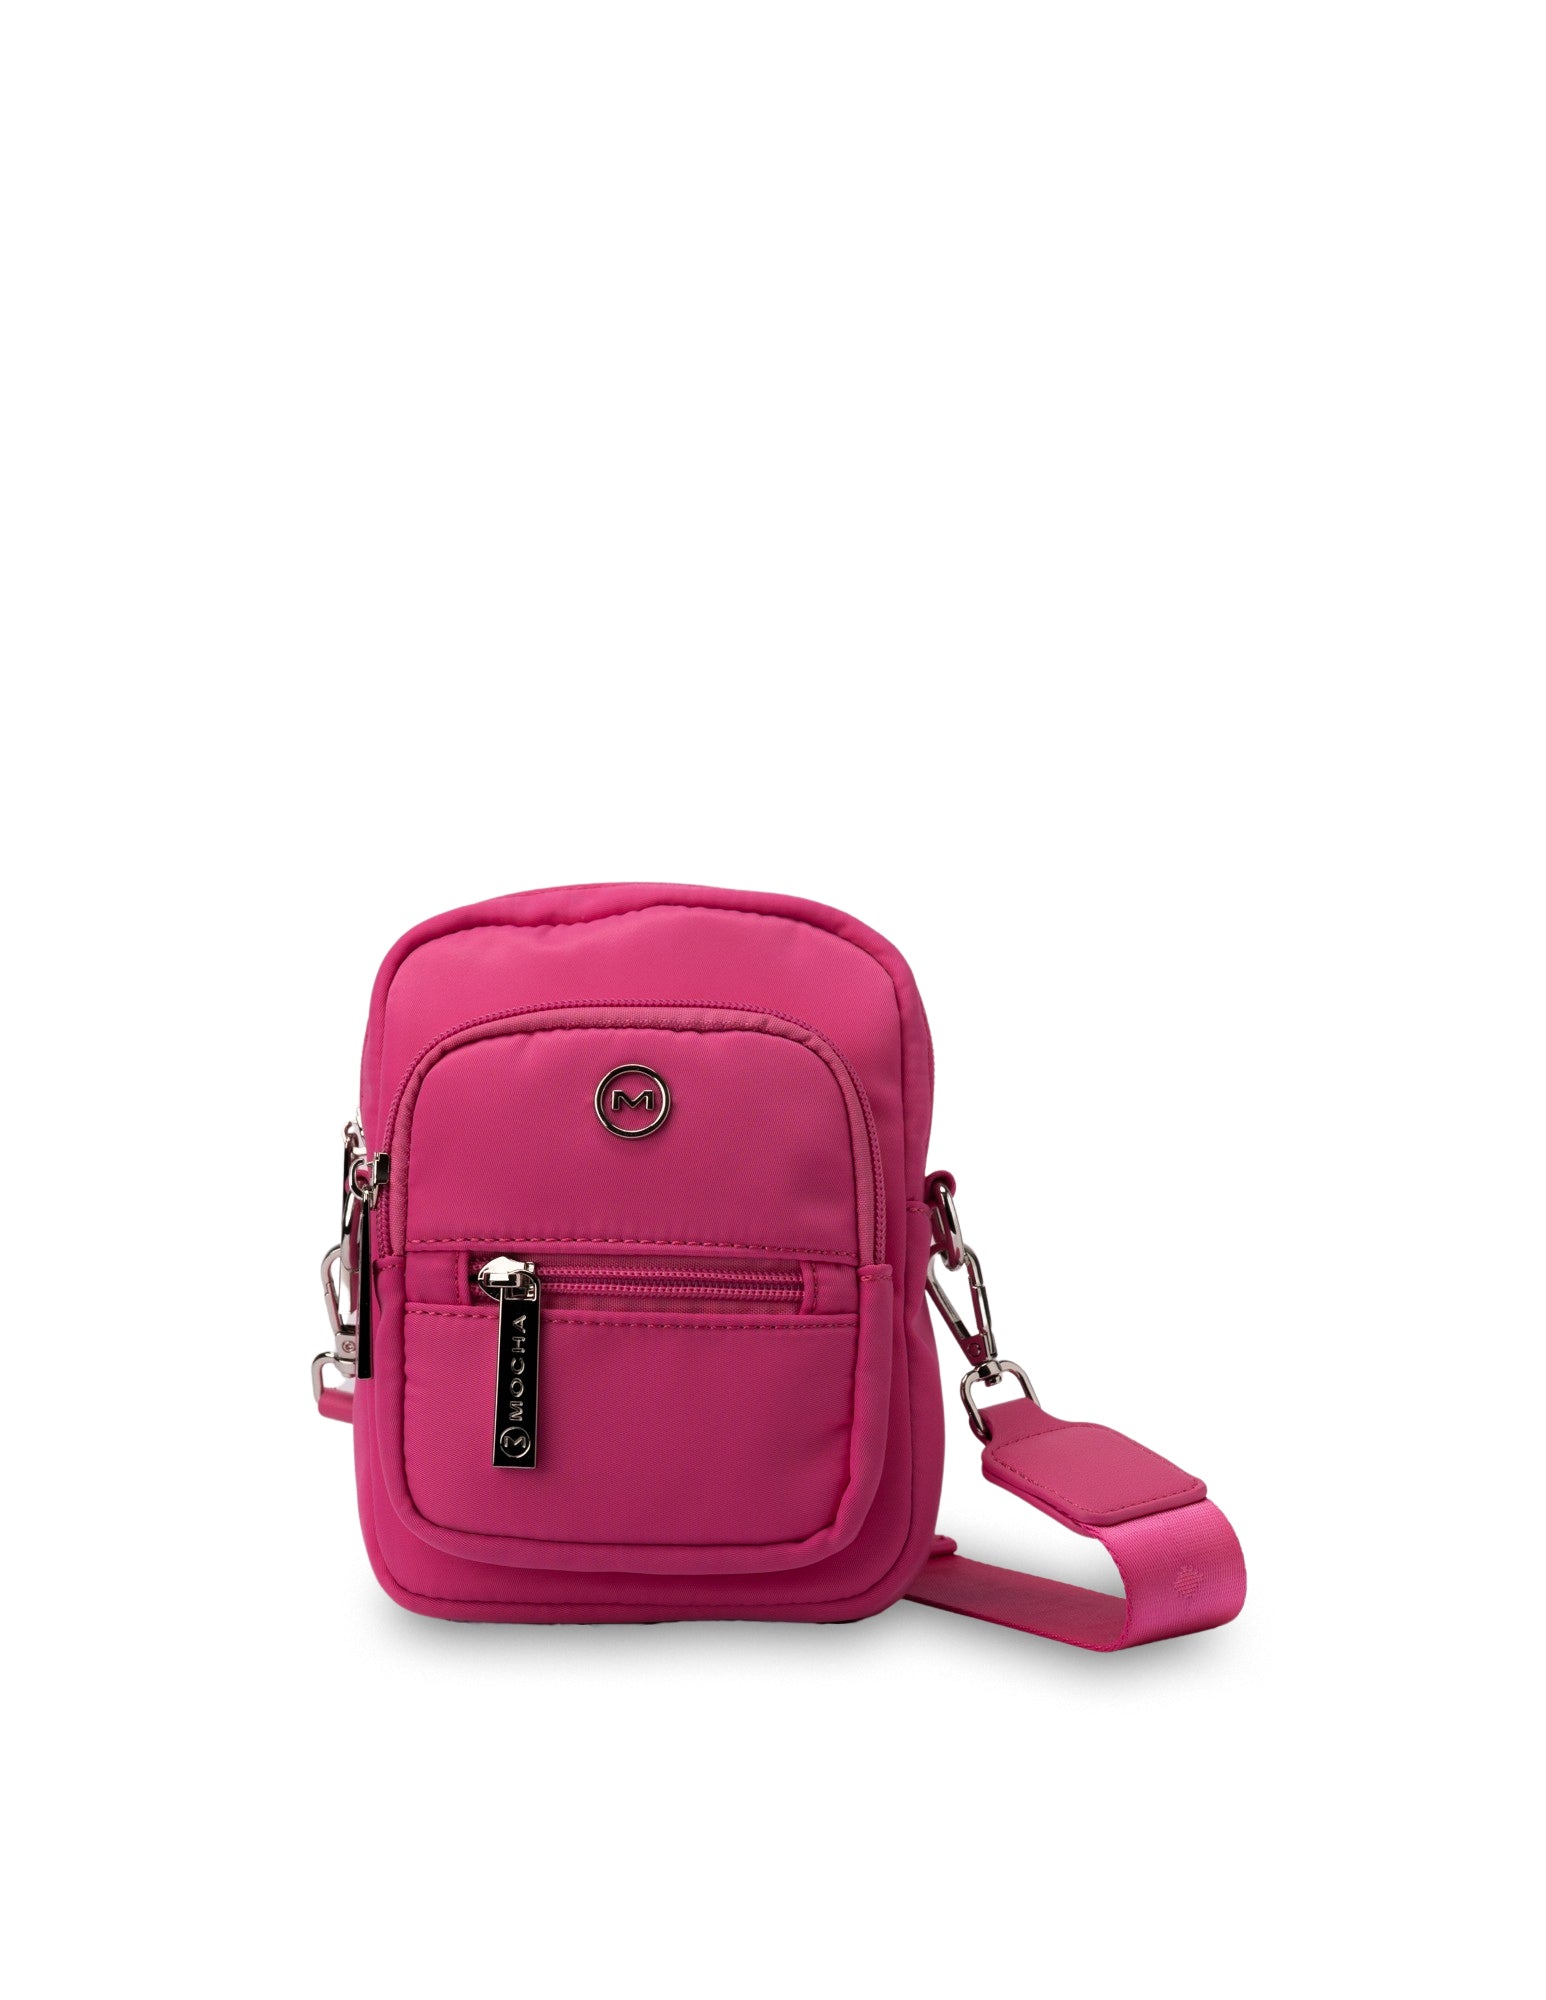 Nicky Nylon Crossbody Camera Bag in Pink